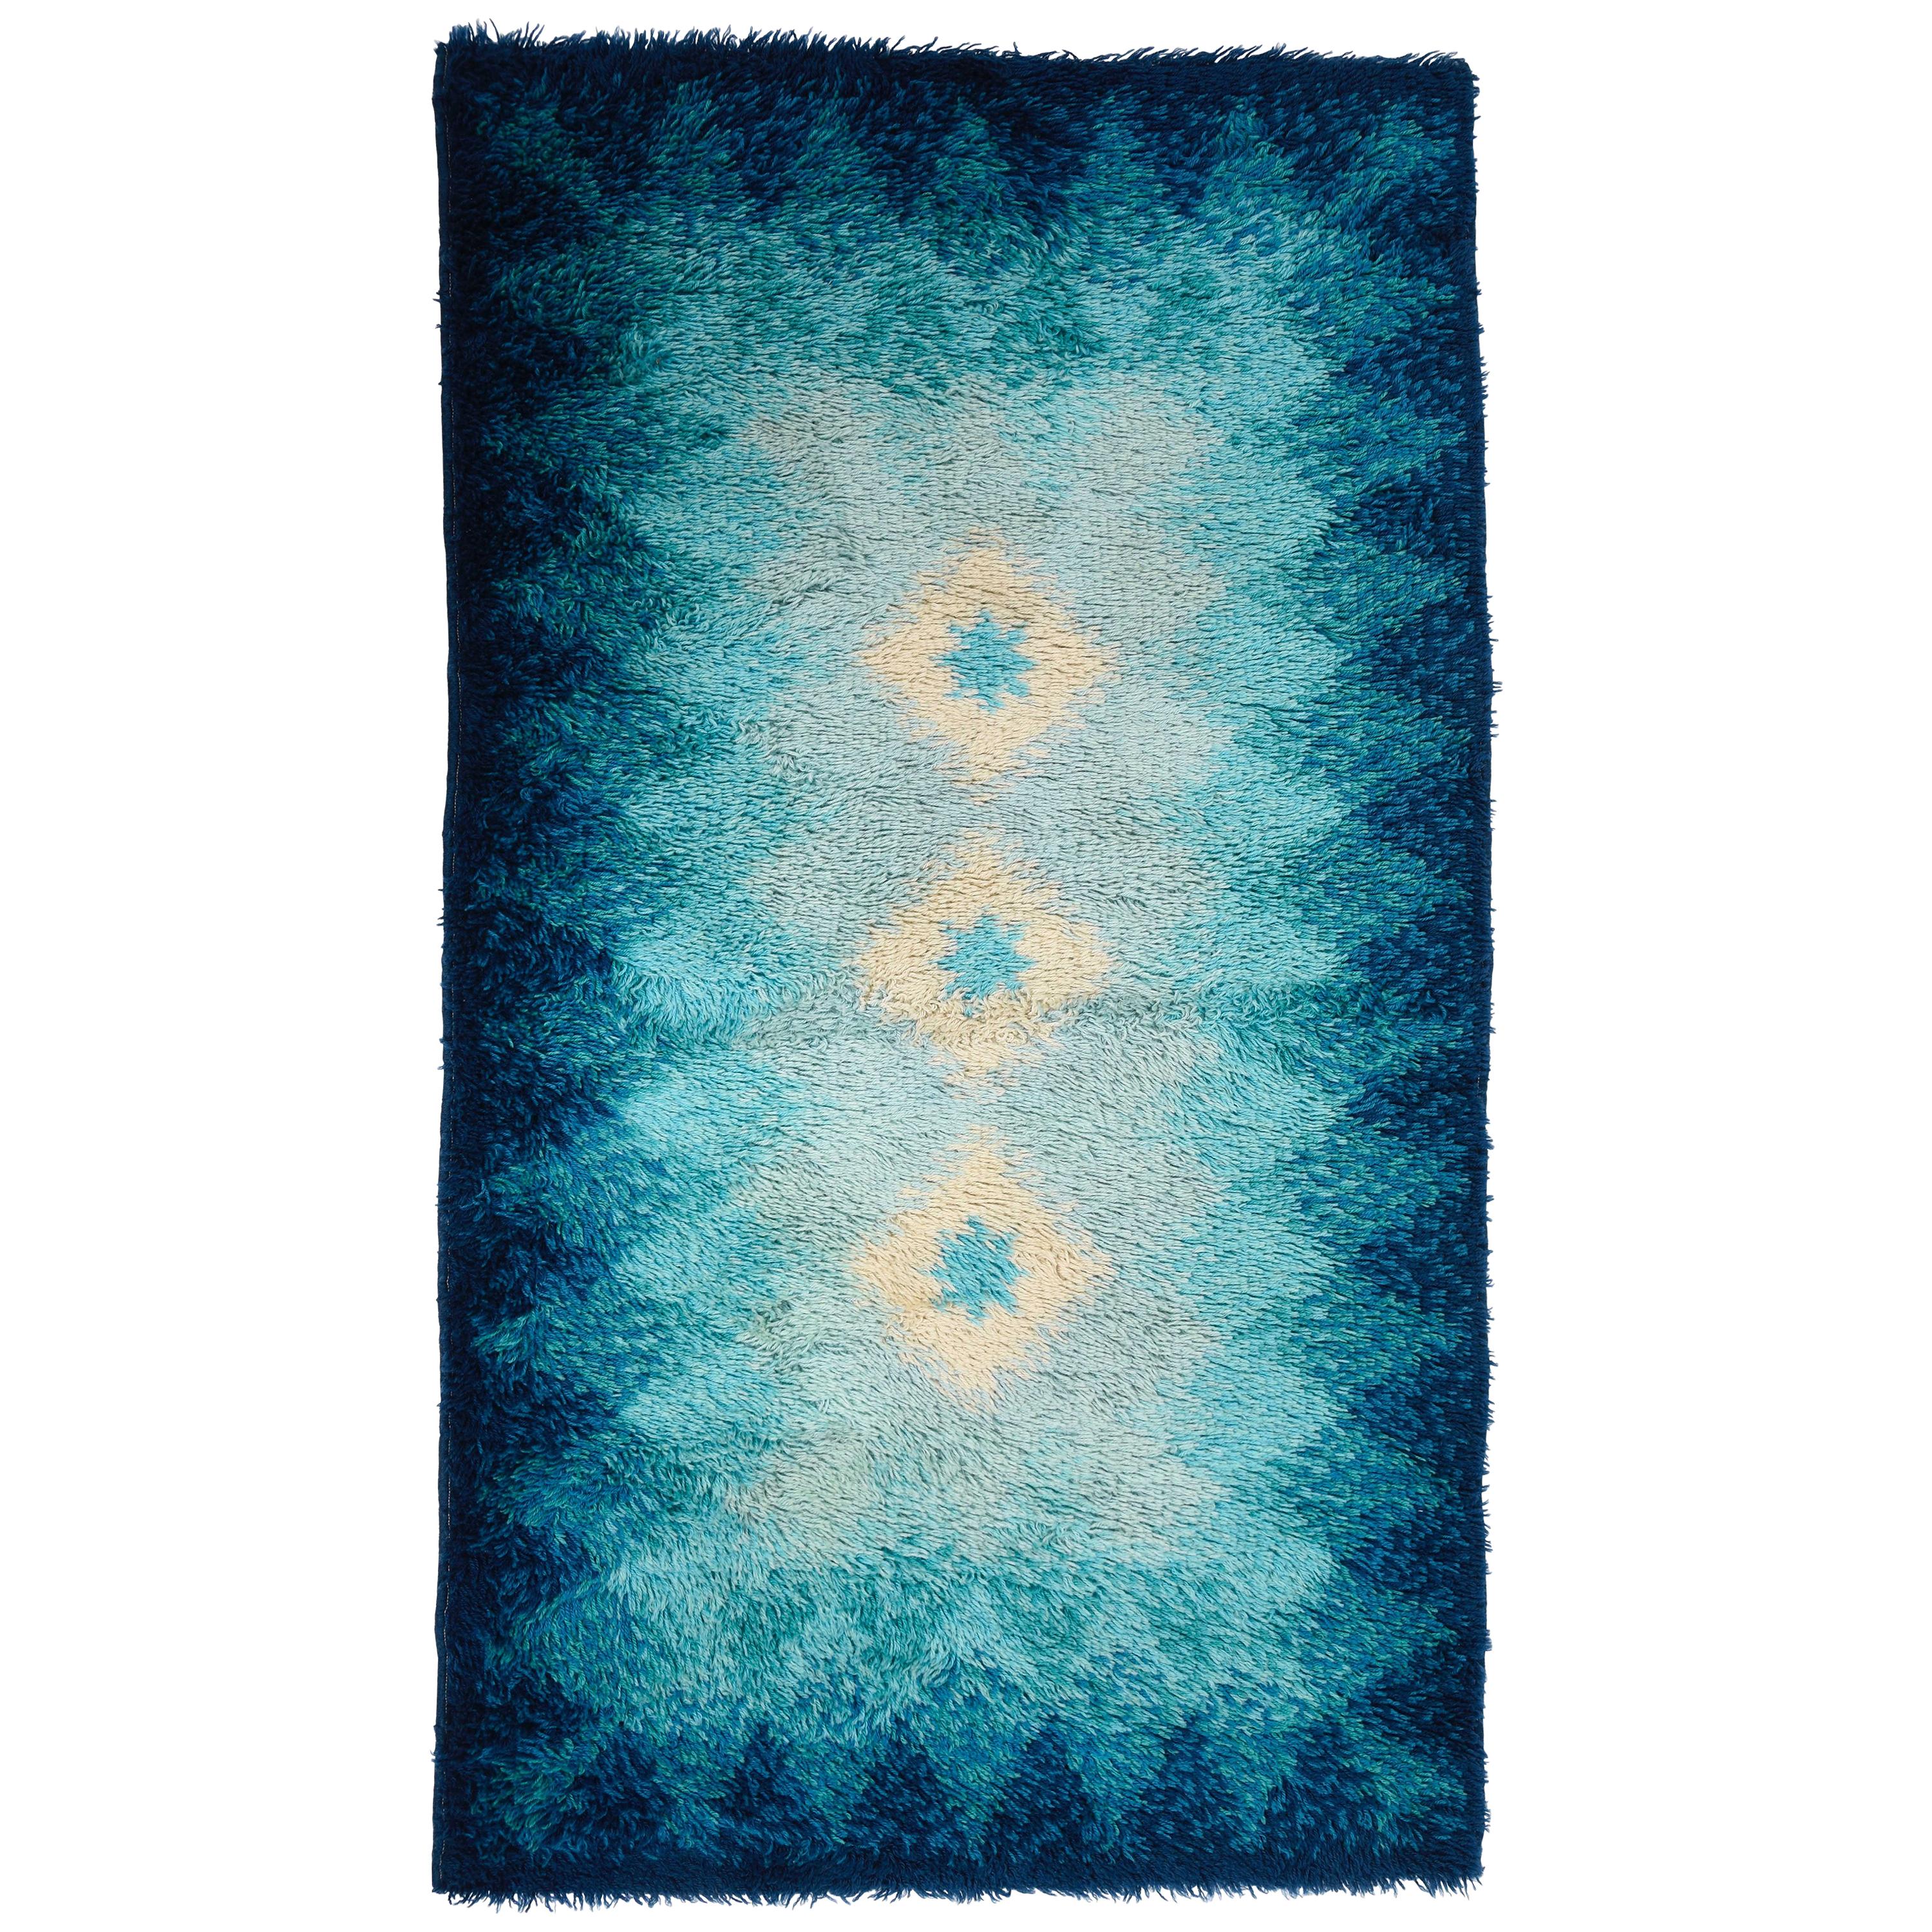 Samit Borgosesia Midcentury Blue and White Virgin Wool Italian Carpet, 1970s